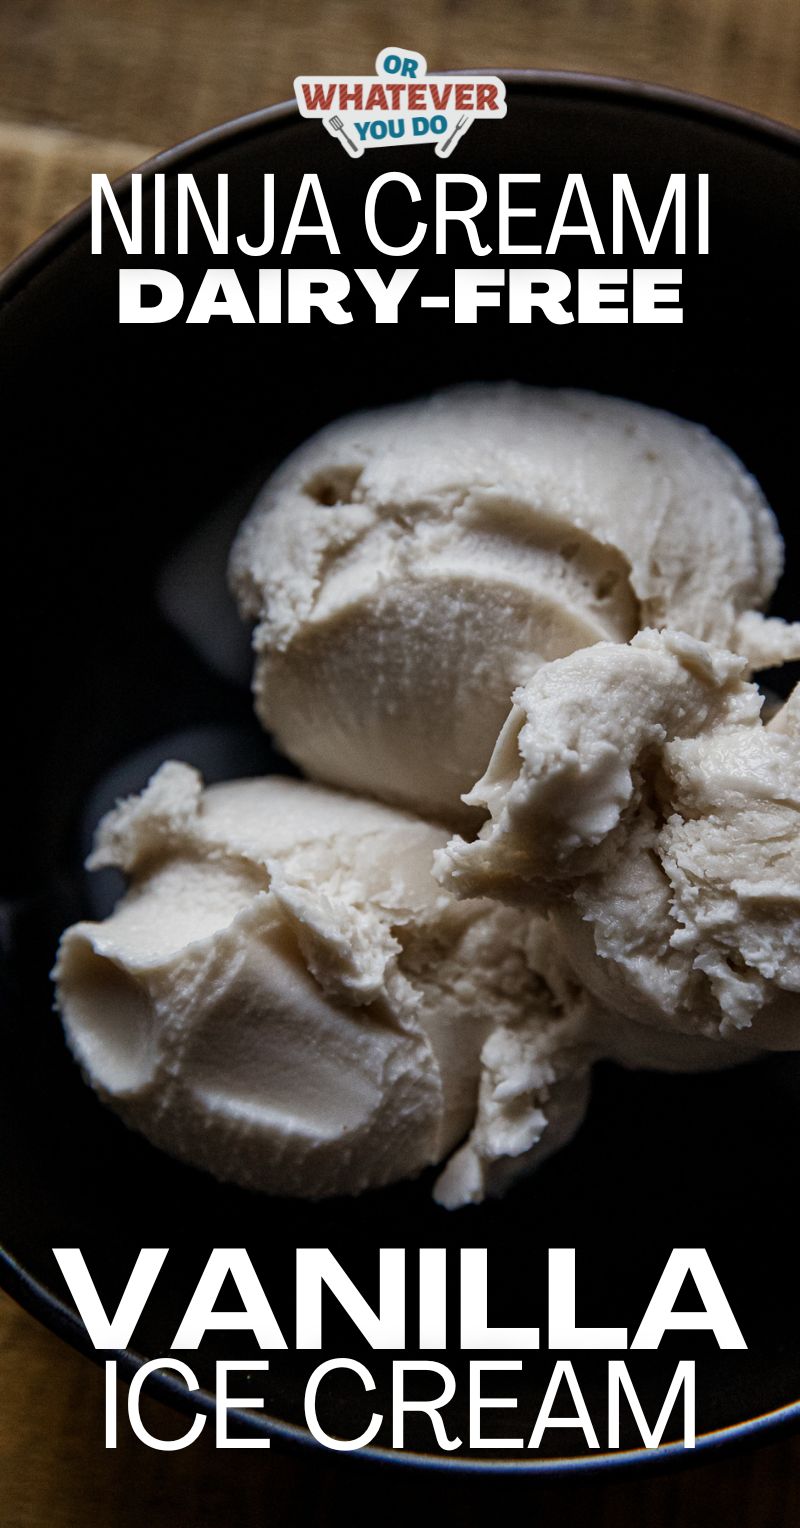 Ninja Creami Dairy-Free Vanilla Ice Cream